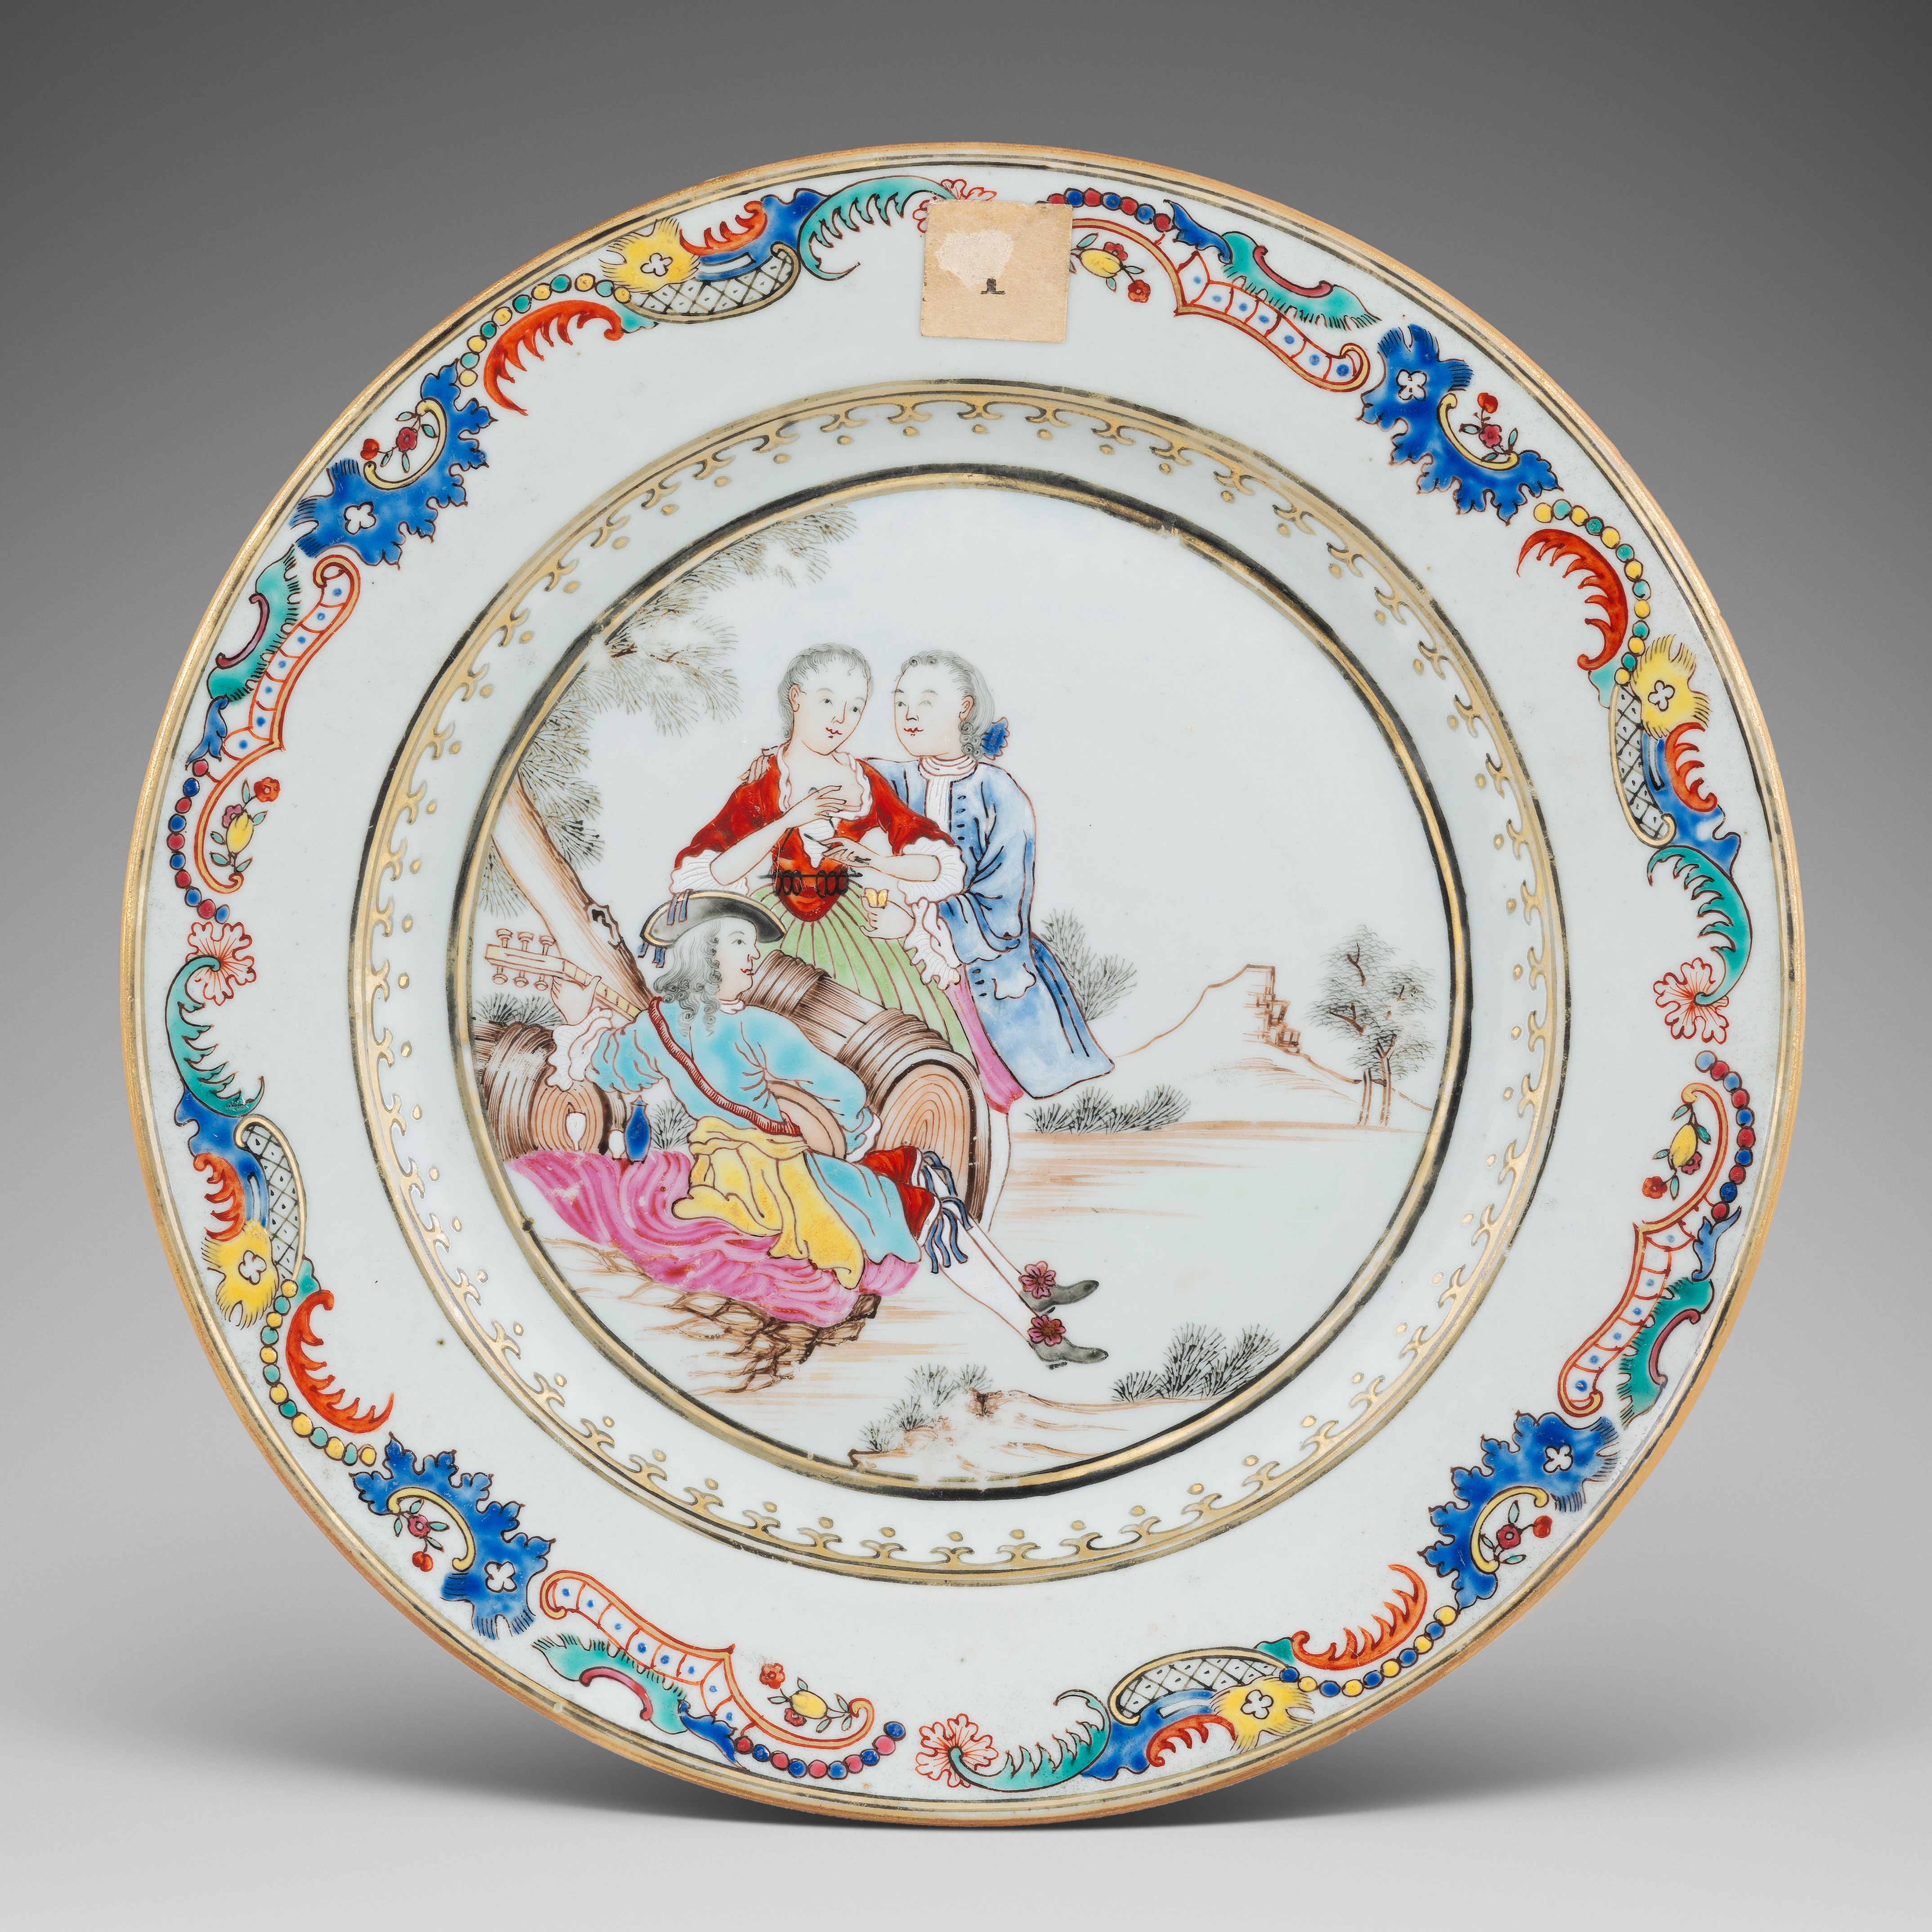 Famille rose Porcelain Qianlong period (1736-1795), China